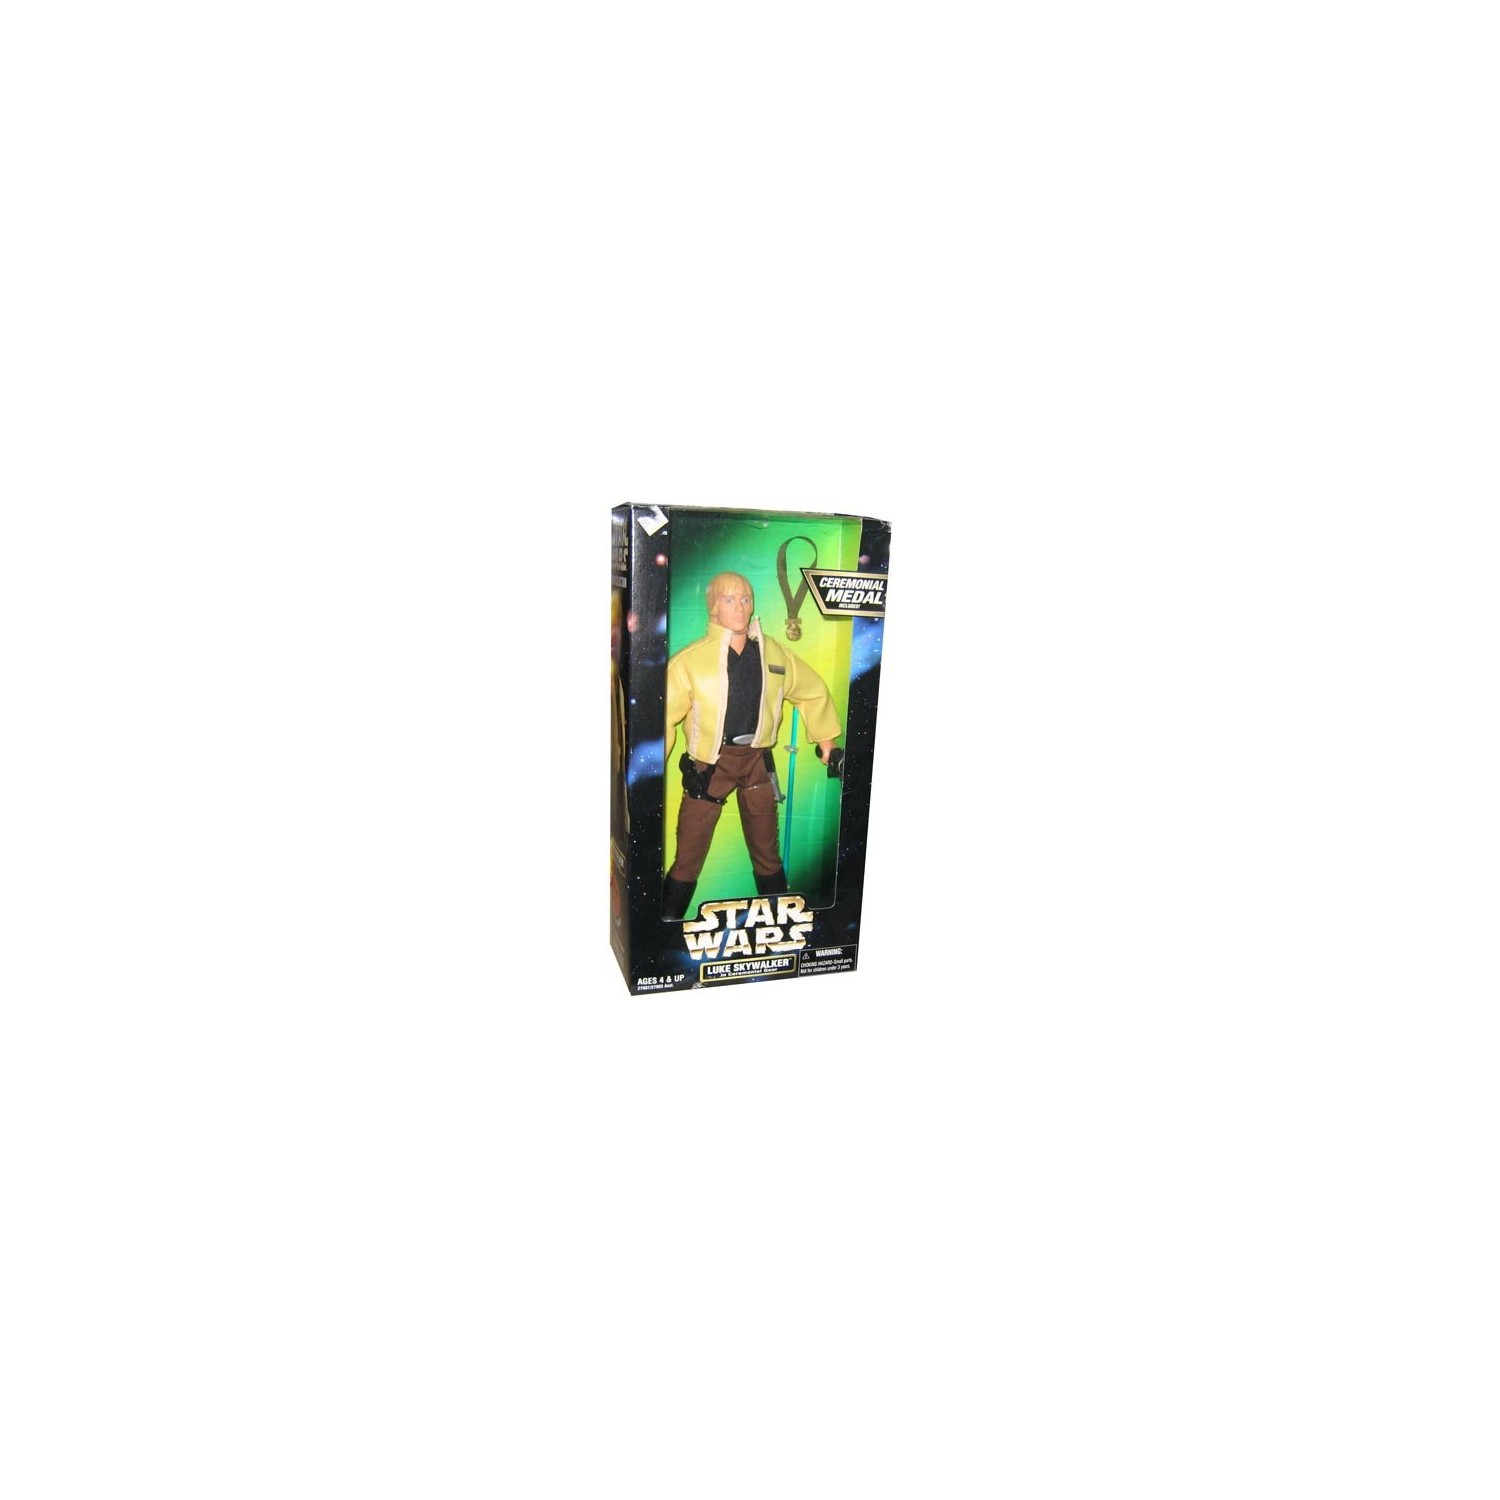 Star Wars Action Collection 12" Luke Skywalker Figure in Ceremonial Gear